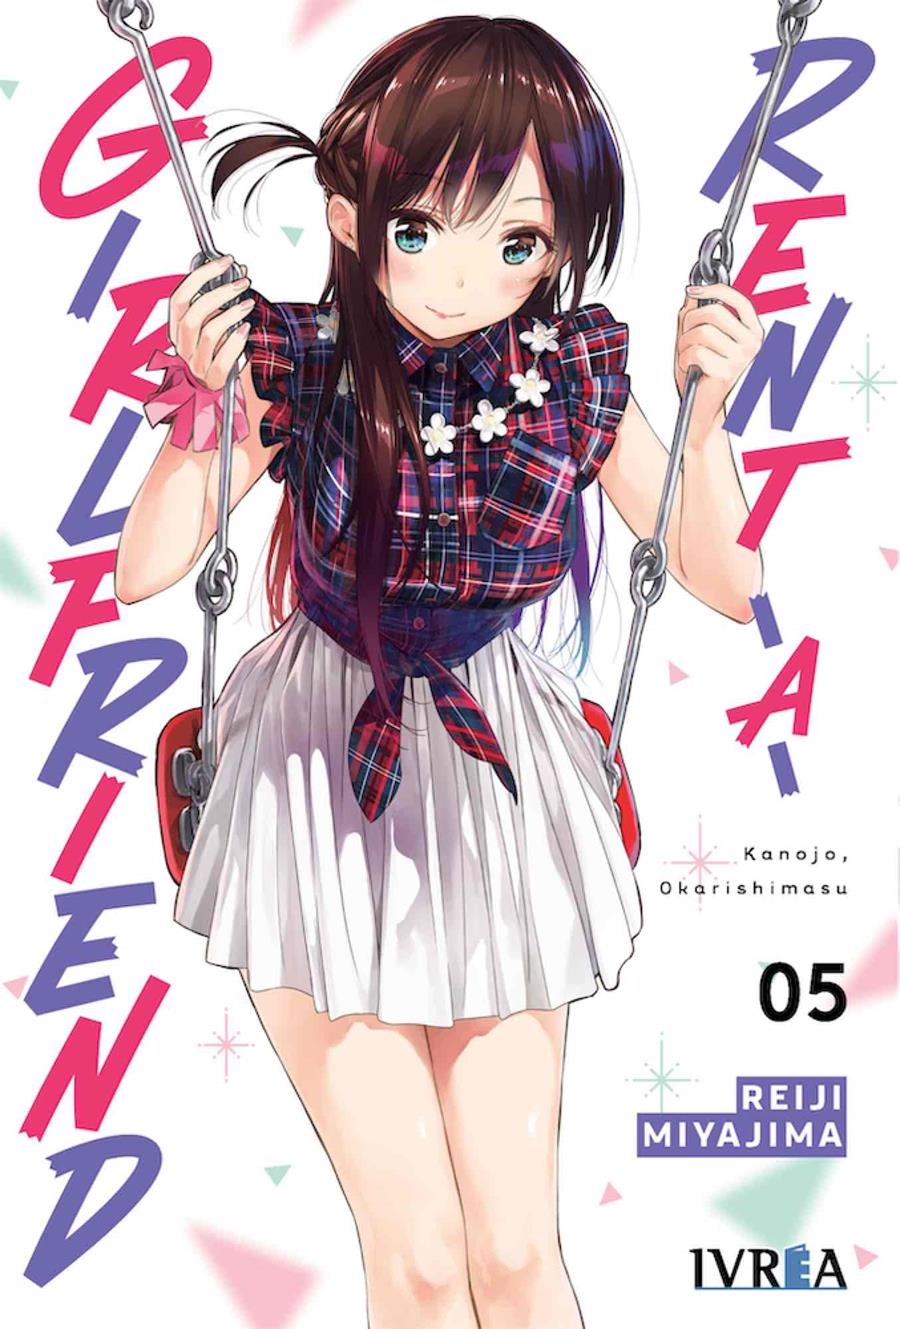 RENT-A-GIRLFRIEND Nº05 [RUSTICA] | MIYAJIMA, REIJI | Akira Comics  - libreria donde comprar comics, juegos y libros online